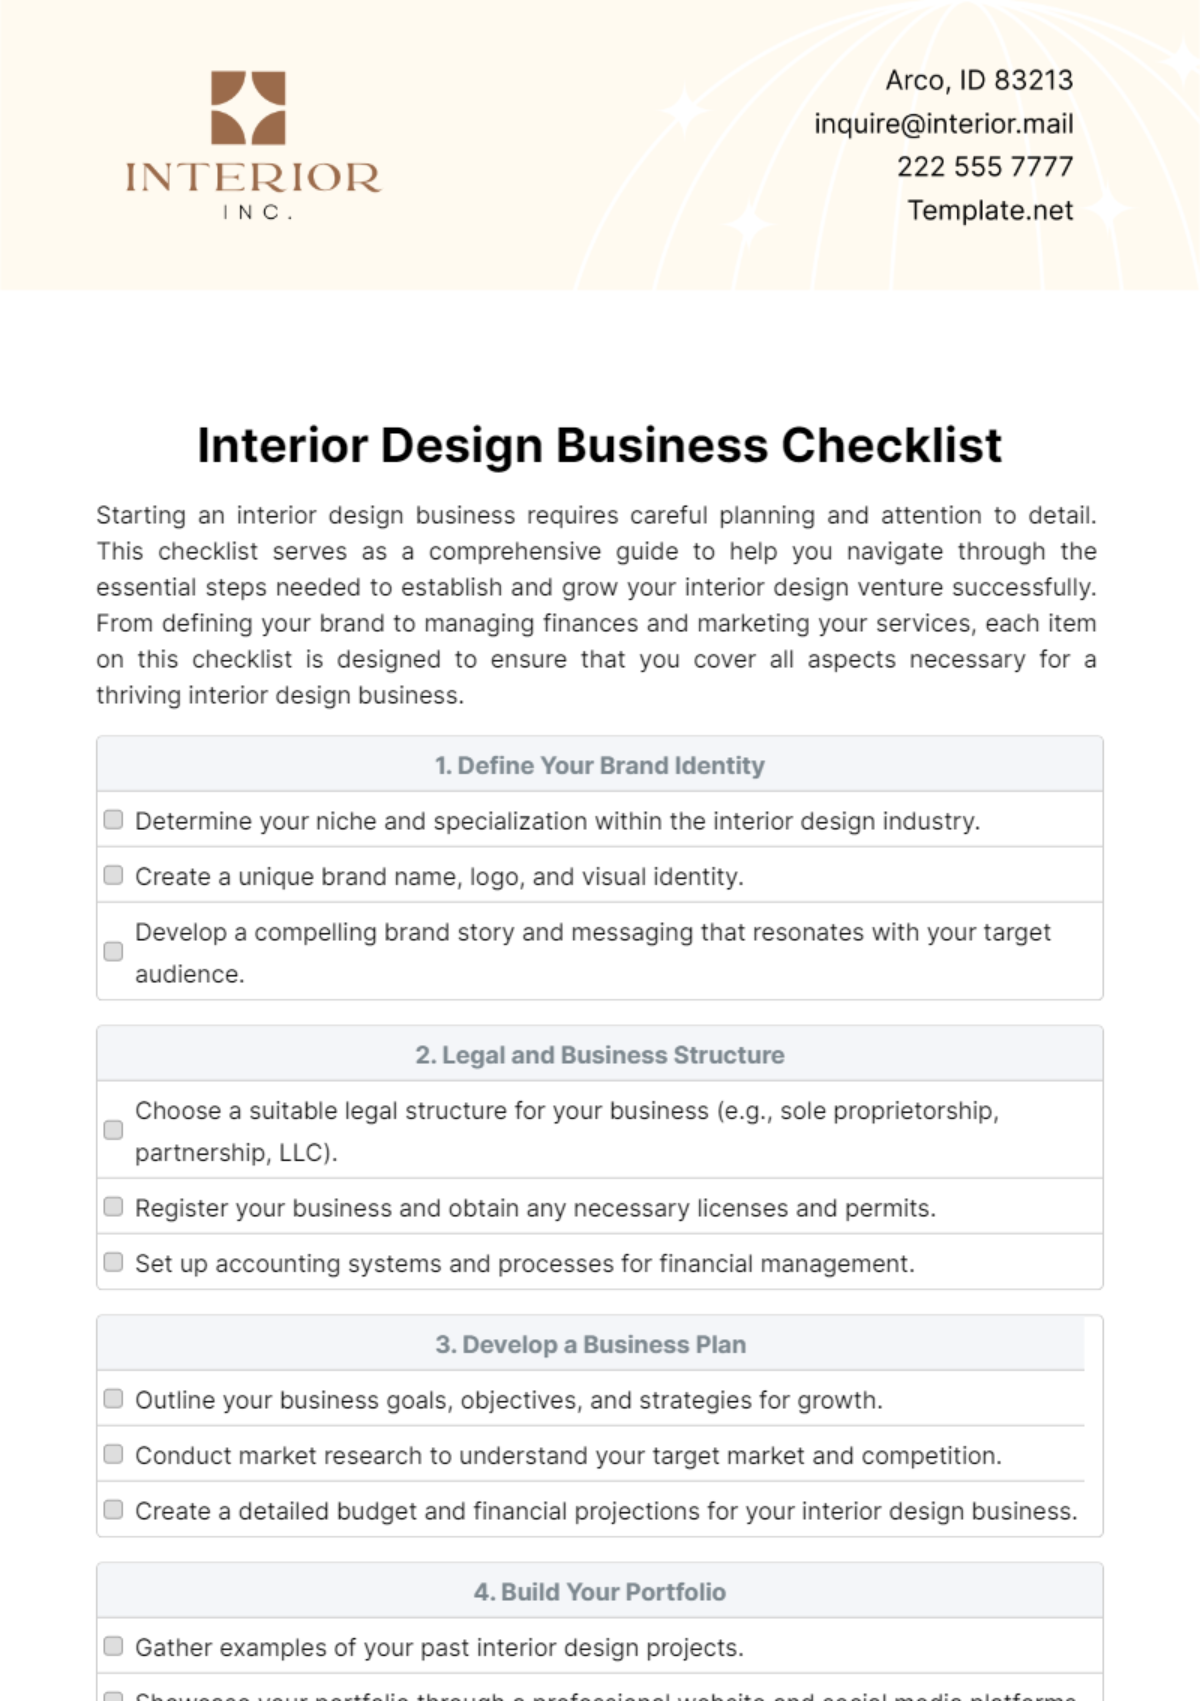 Interior Design Business Checklist Template